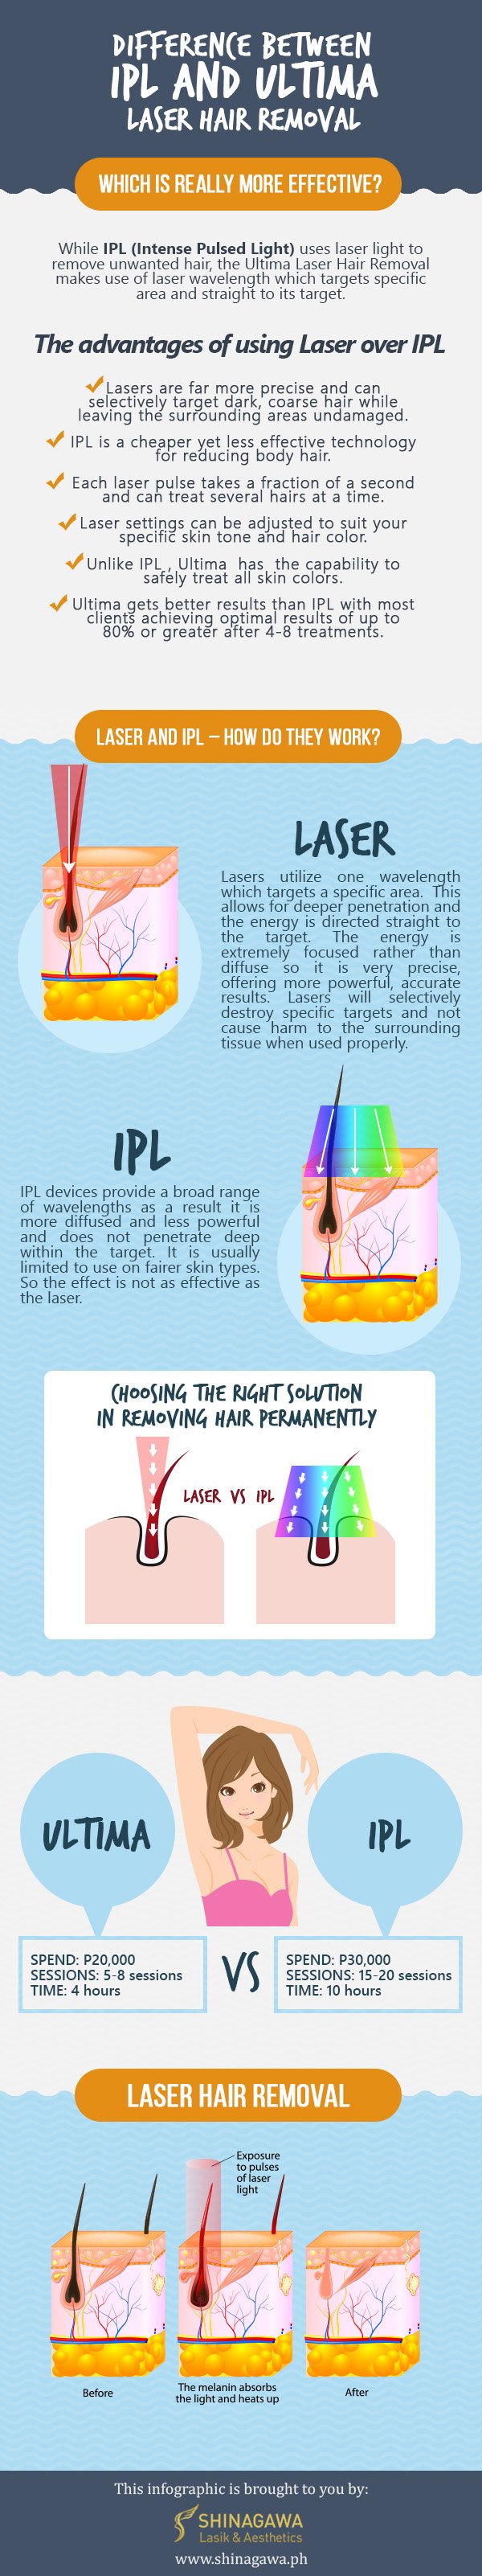 DIFFERENCE BETWEEN IPL AND ULTIMA LASER HAIR REMOVAL SHINAGAWA PH